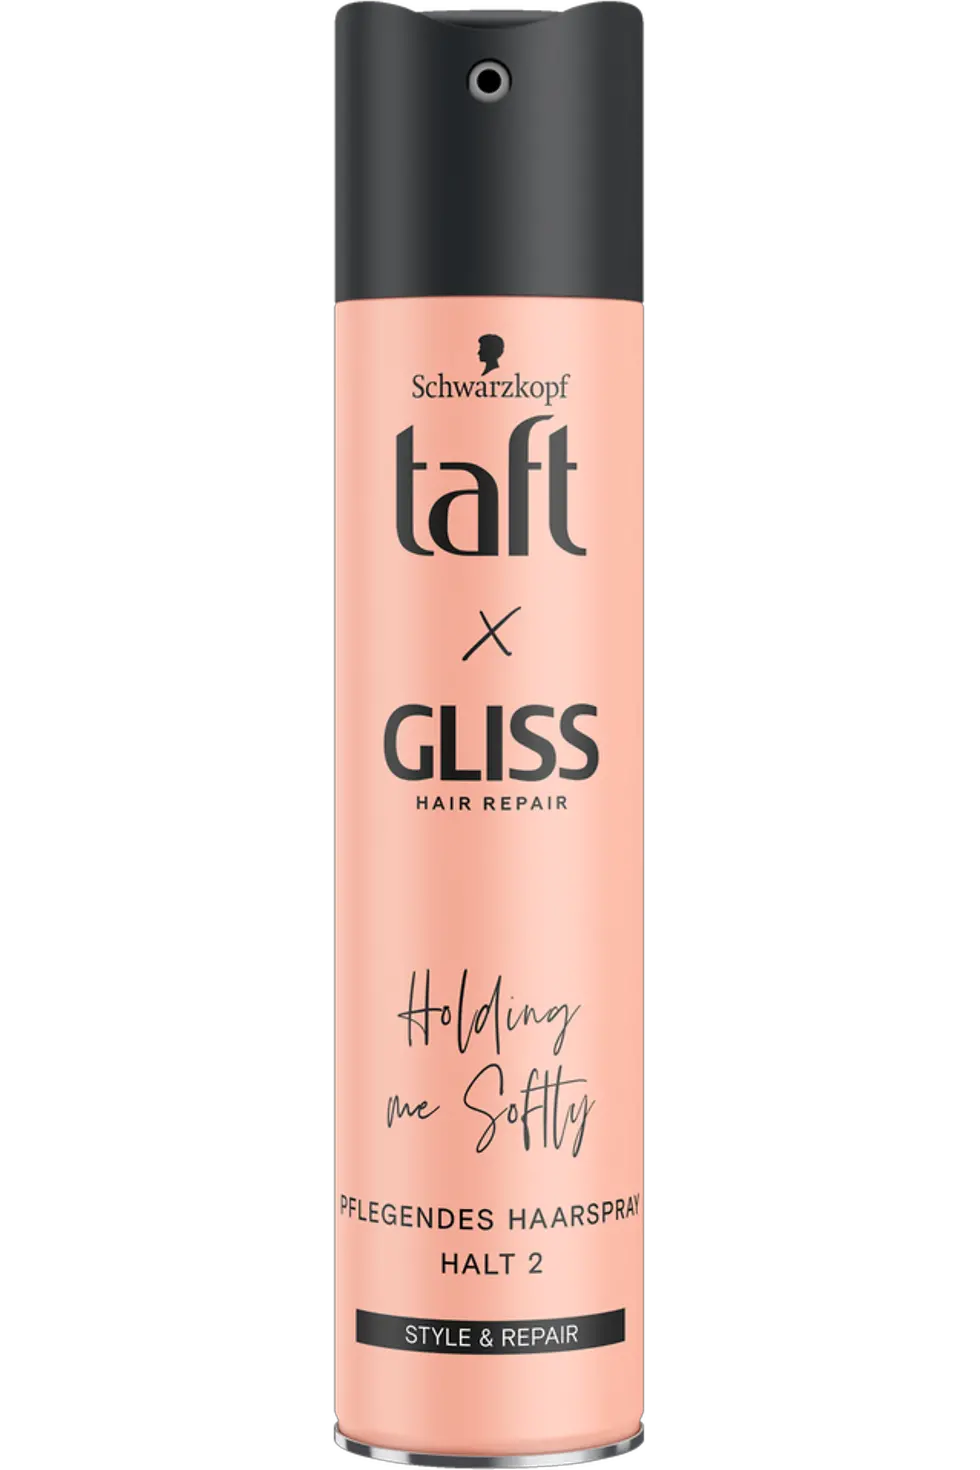 
Taft x Gliss Holding me Softly Pflegendes Haarspray